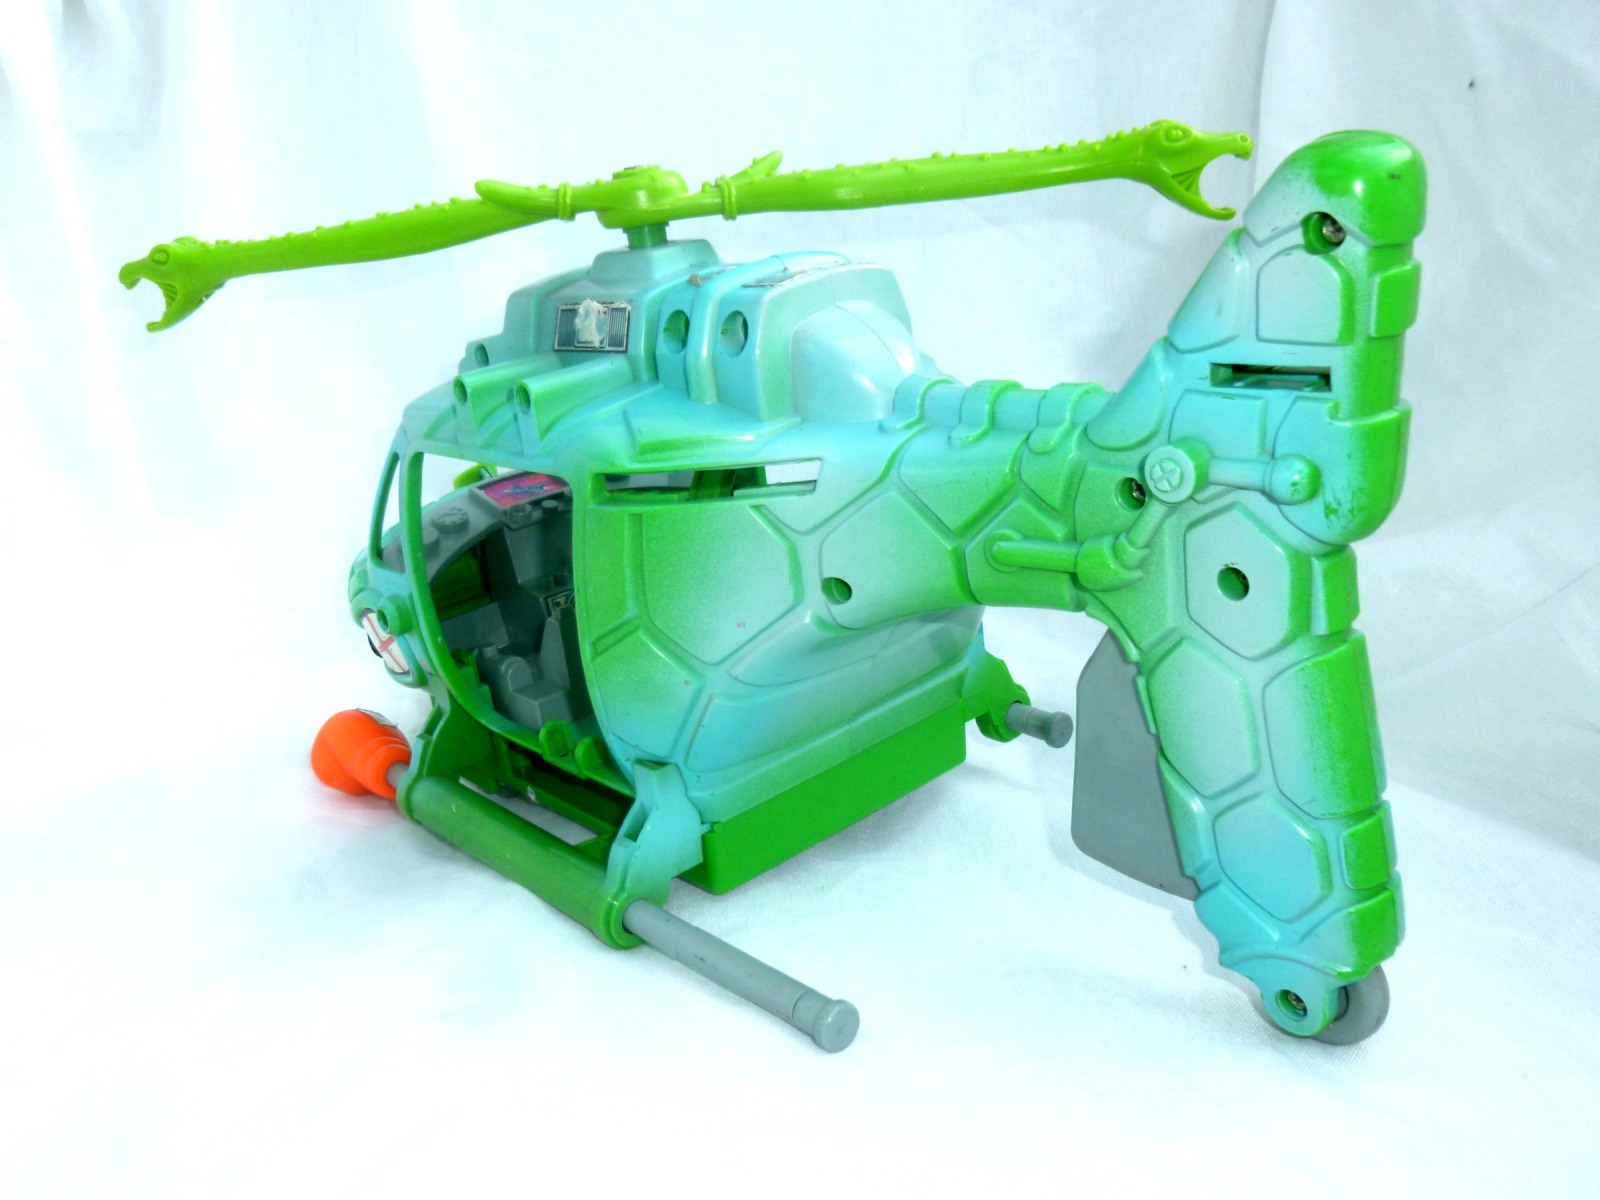 Turtlecopter - The Gooey Green Gunship 1991 Mirage Studios / Playmates Toys 4